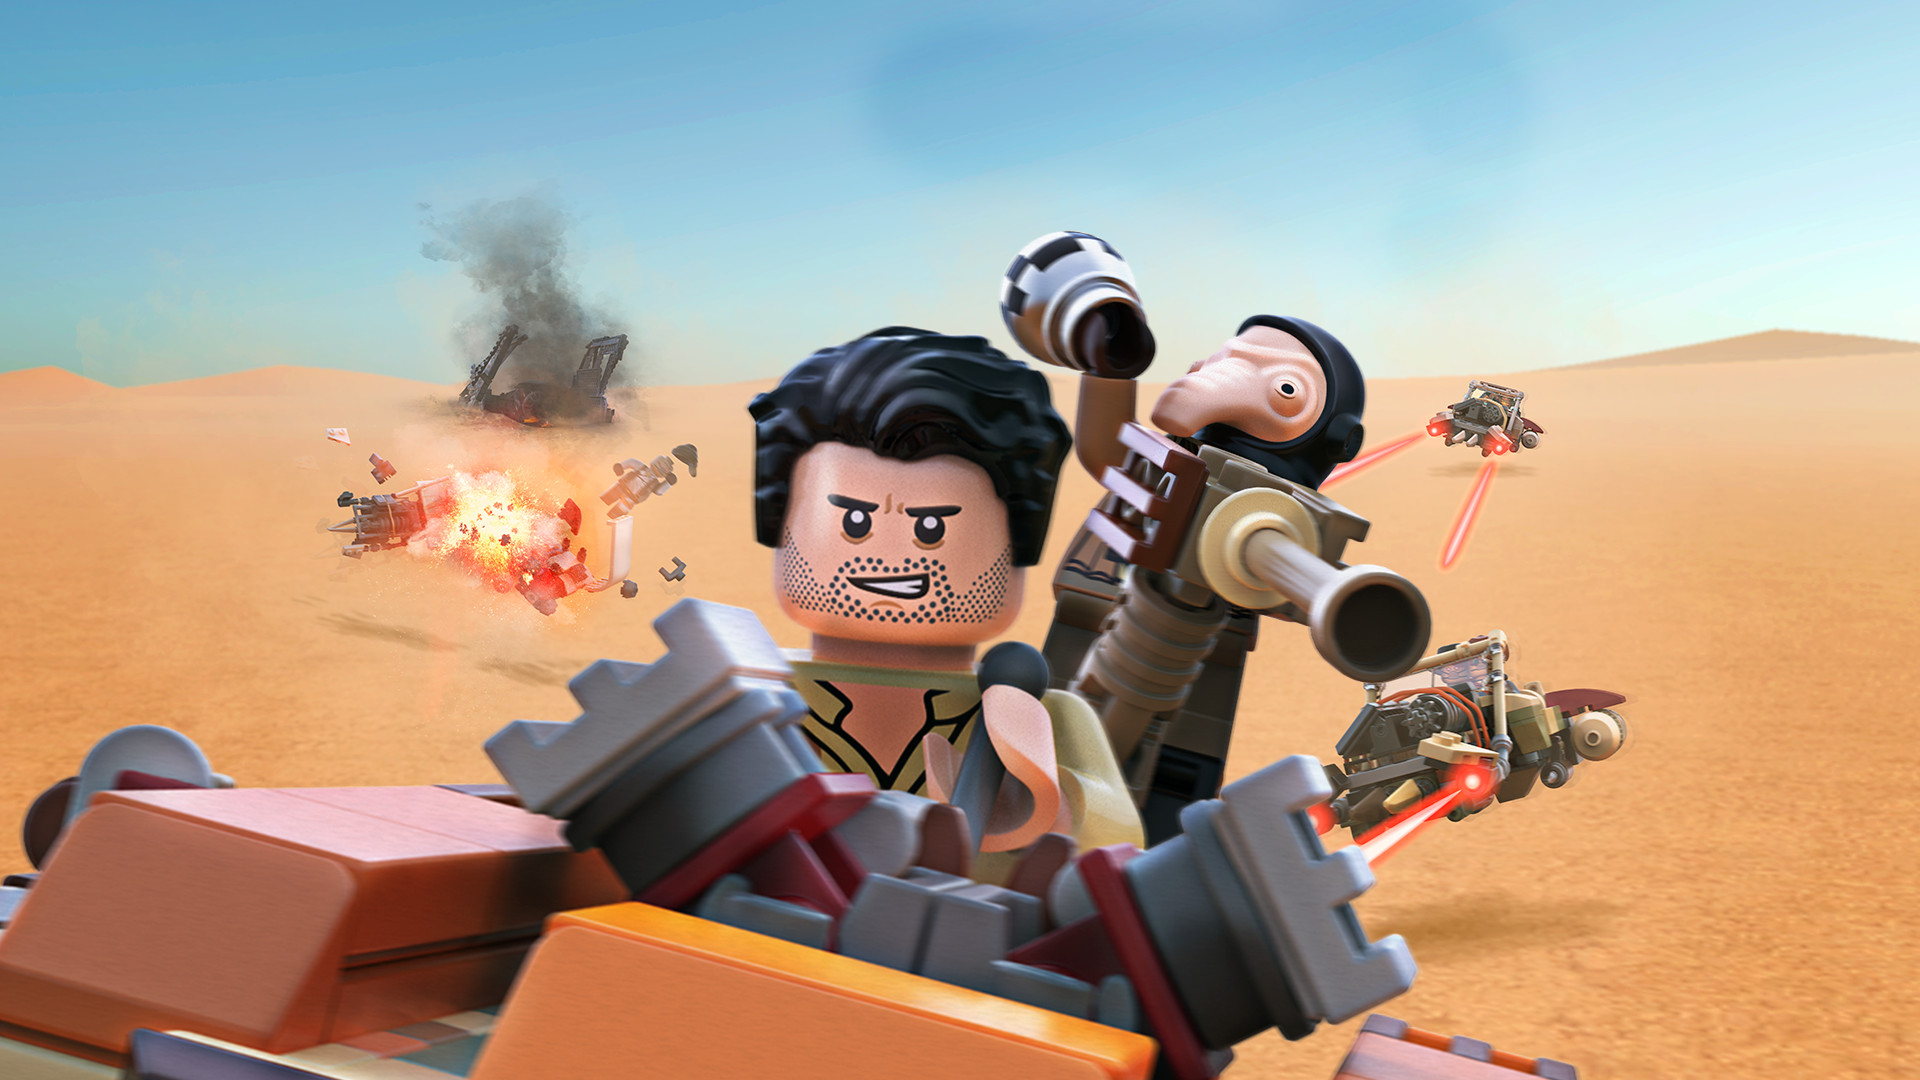 LEGO Star Wars: The Force Awakens - Jakku: Poe's Quest for Survival DLC Steam CD Key 2.25 $